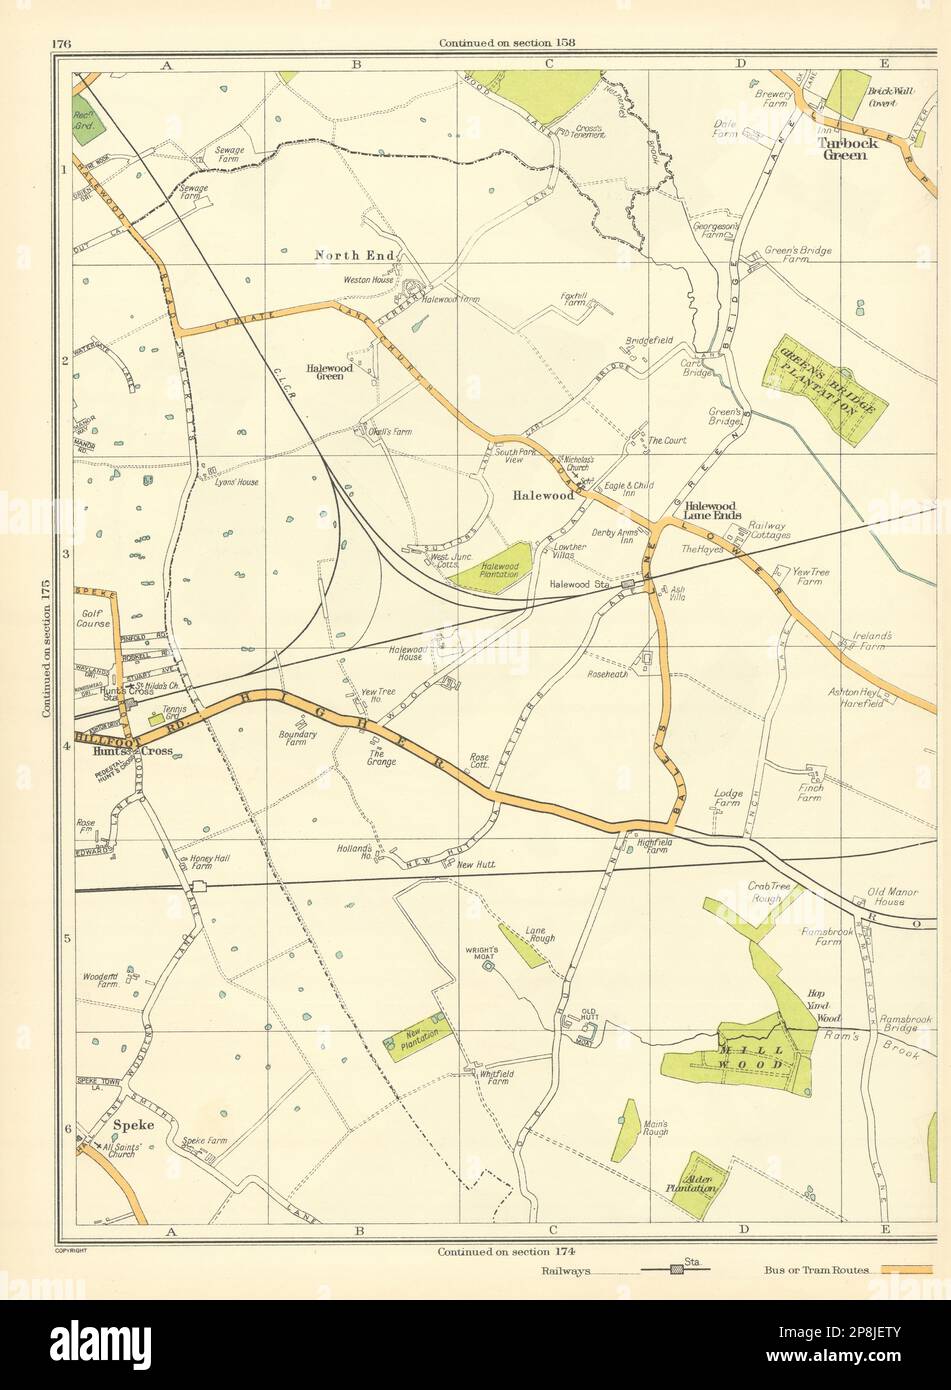 LANCASHIRE North End Halewood Mill Wood jagt Speke Tarbock Green 1935 alte Karte Stockfoto